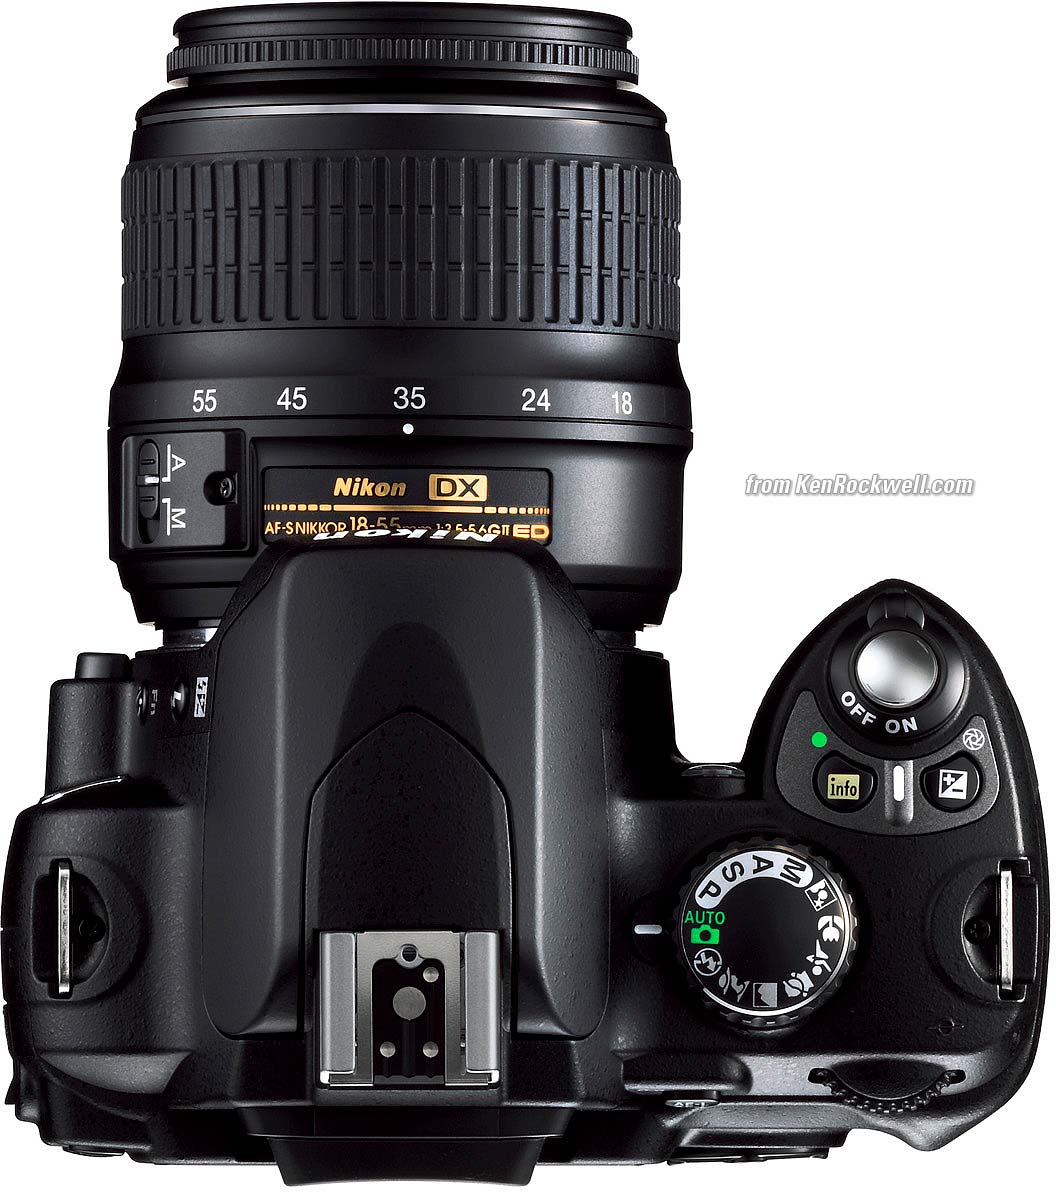 Nikon Digital Camera D60 User Manual